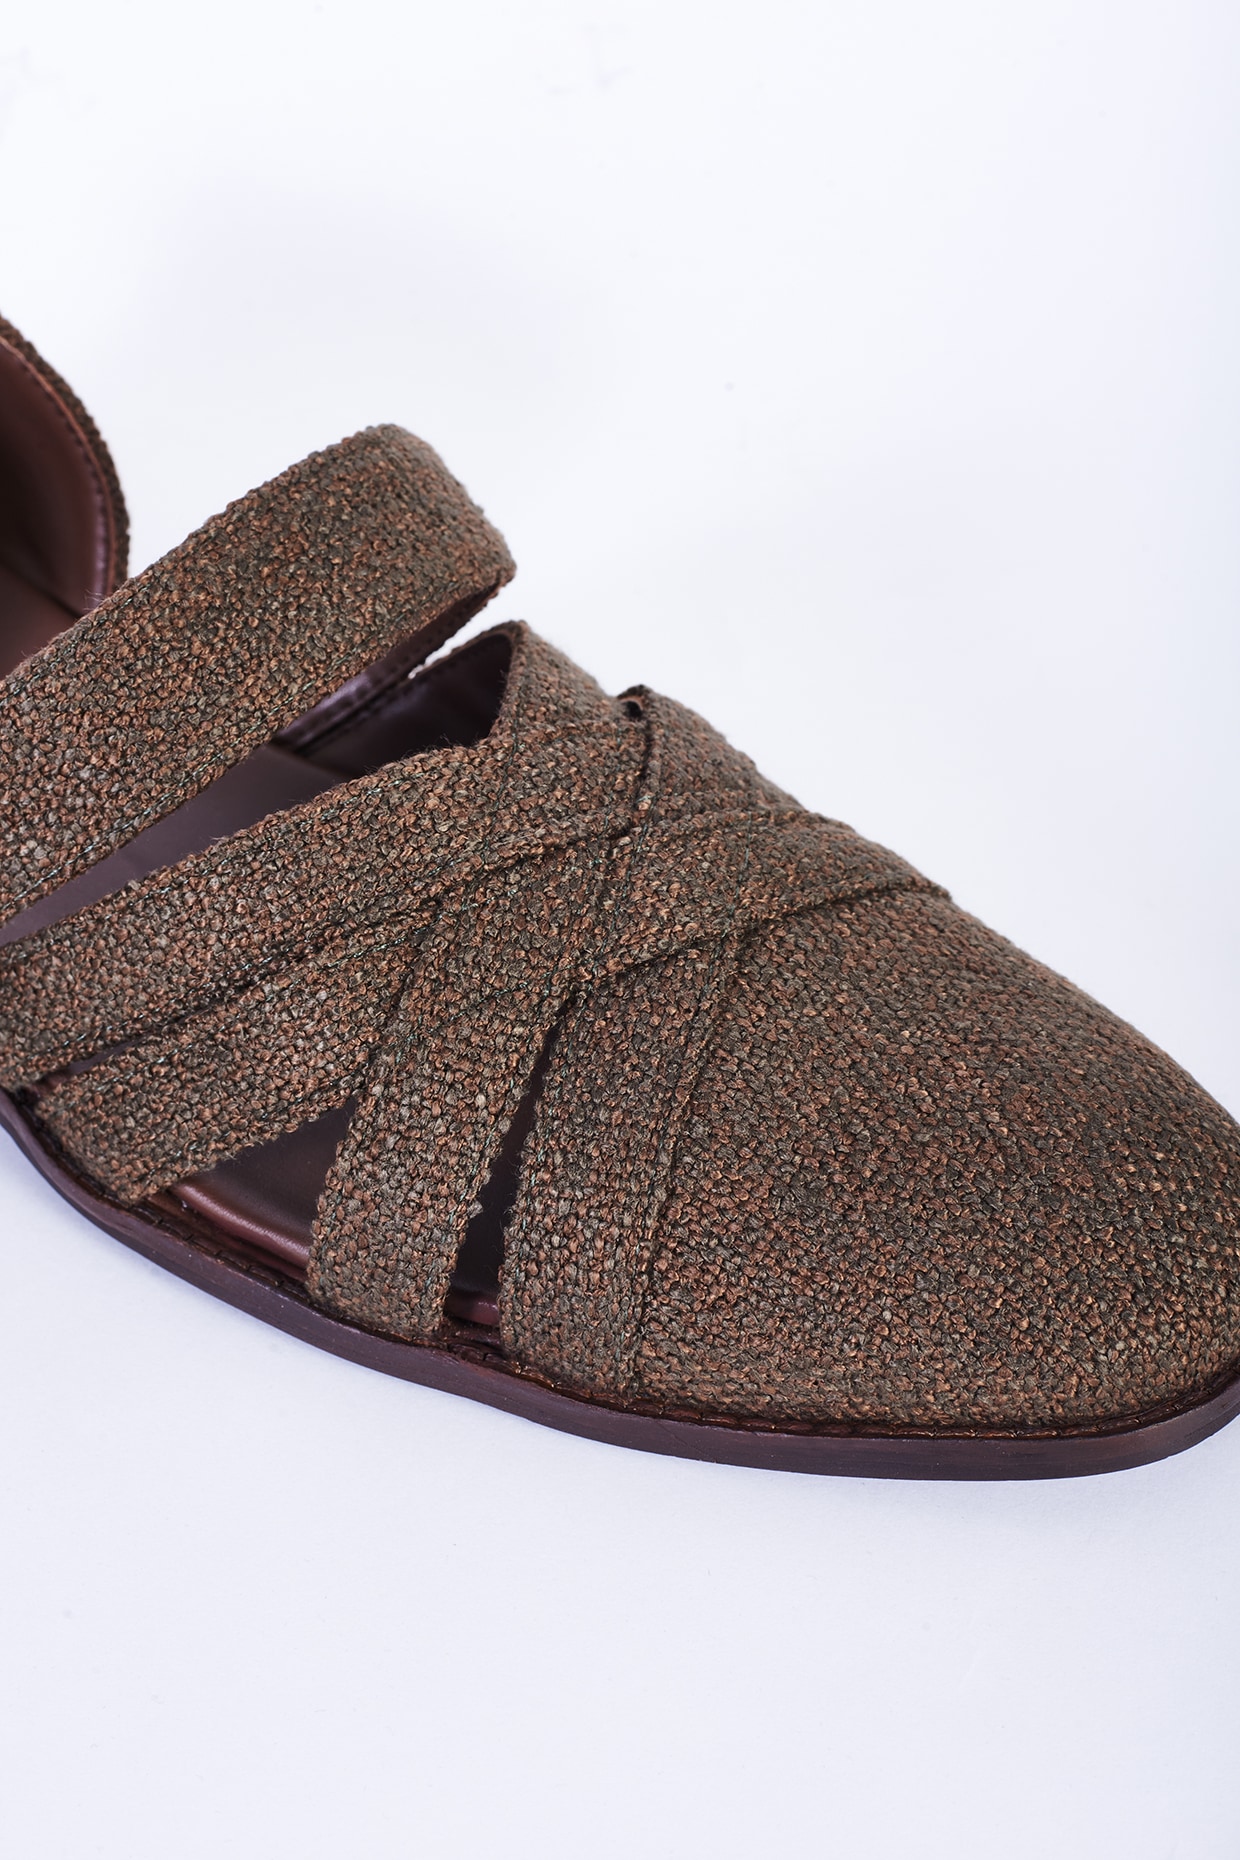 Buy Wholesale Pakistan Top Quality Men's Peshawari Chappal 100% Pu Genuine  Leather Customized Men Sandal In Solid Color And Design & Latest Designs  Custom Made Peshawari Khari at USD 4.5 | Global Sources